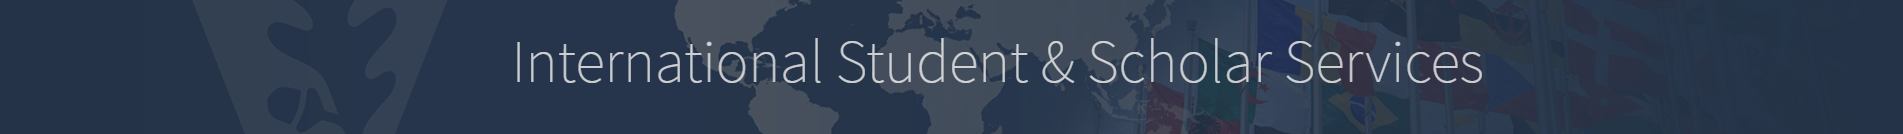 International Student and Scholar Services - Vanderbilt University